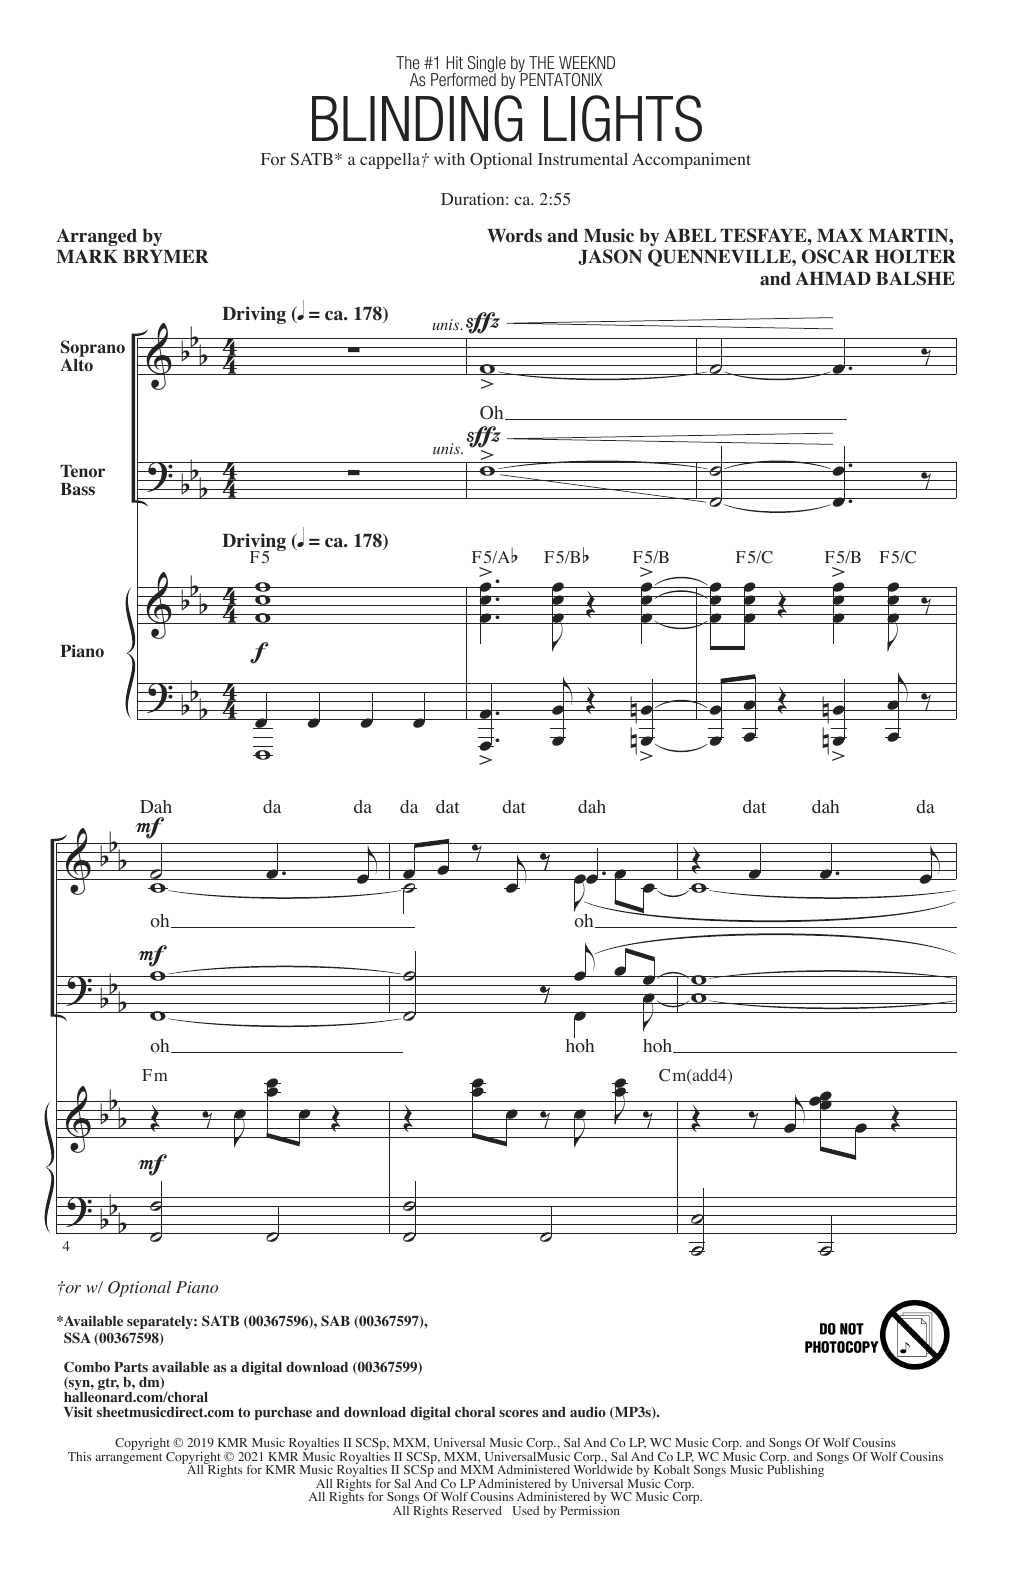 Pentatonix Blinding Lights (arr. Mark Brymer) sheet music notes and chords arranged for SAB Choir